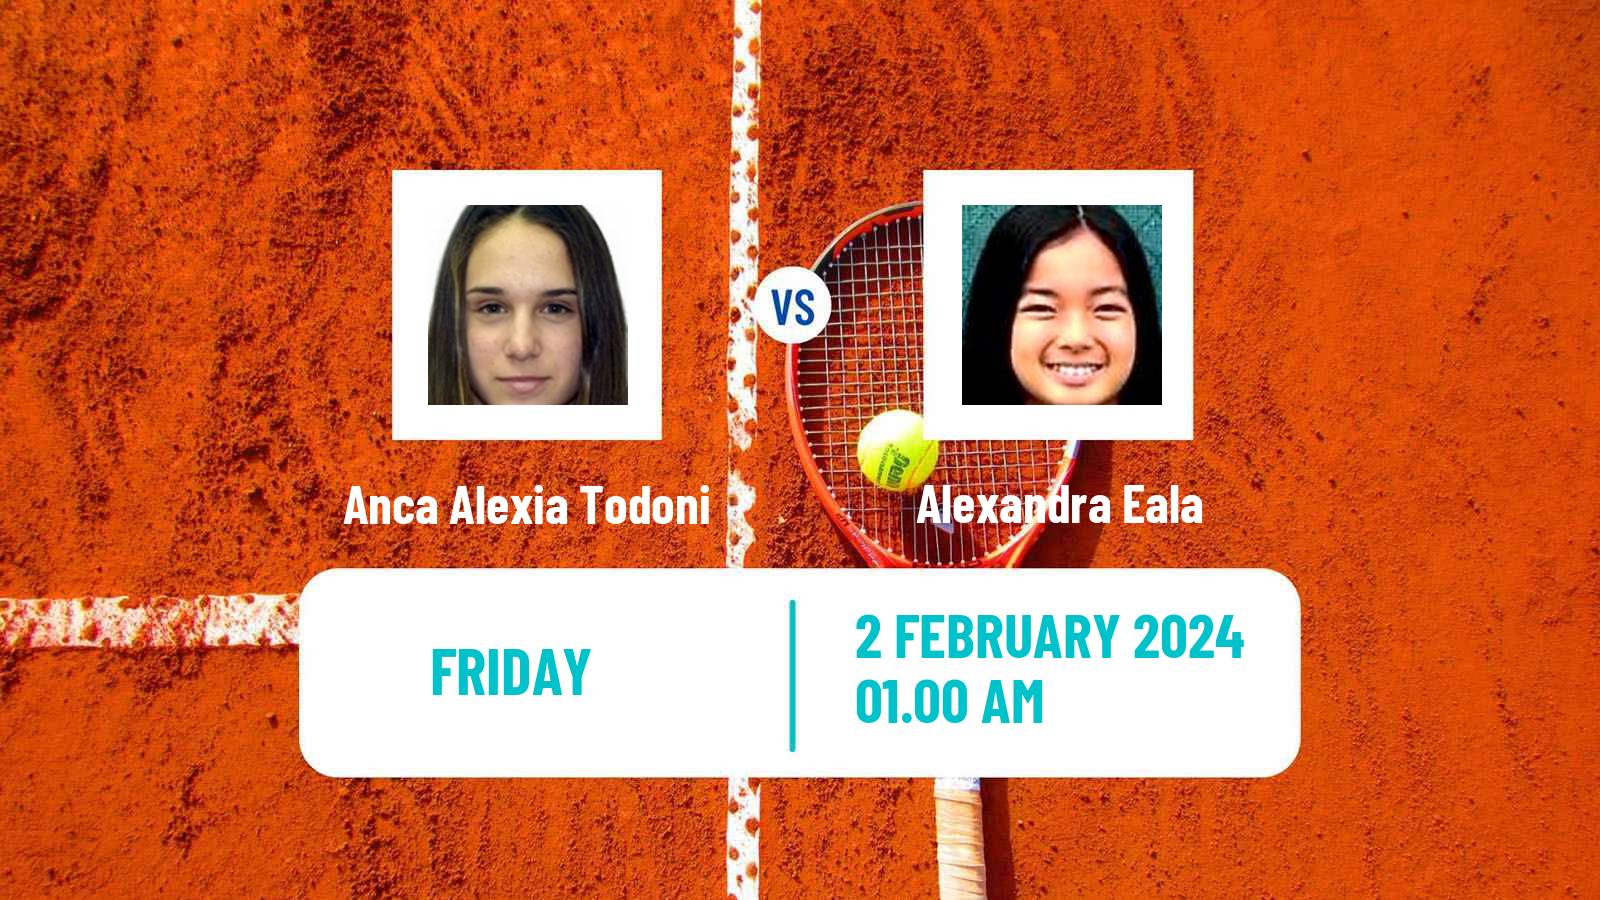 Tennis ITF W50 Indore Women Anca Alexia Todoni - Alexandra Eala